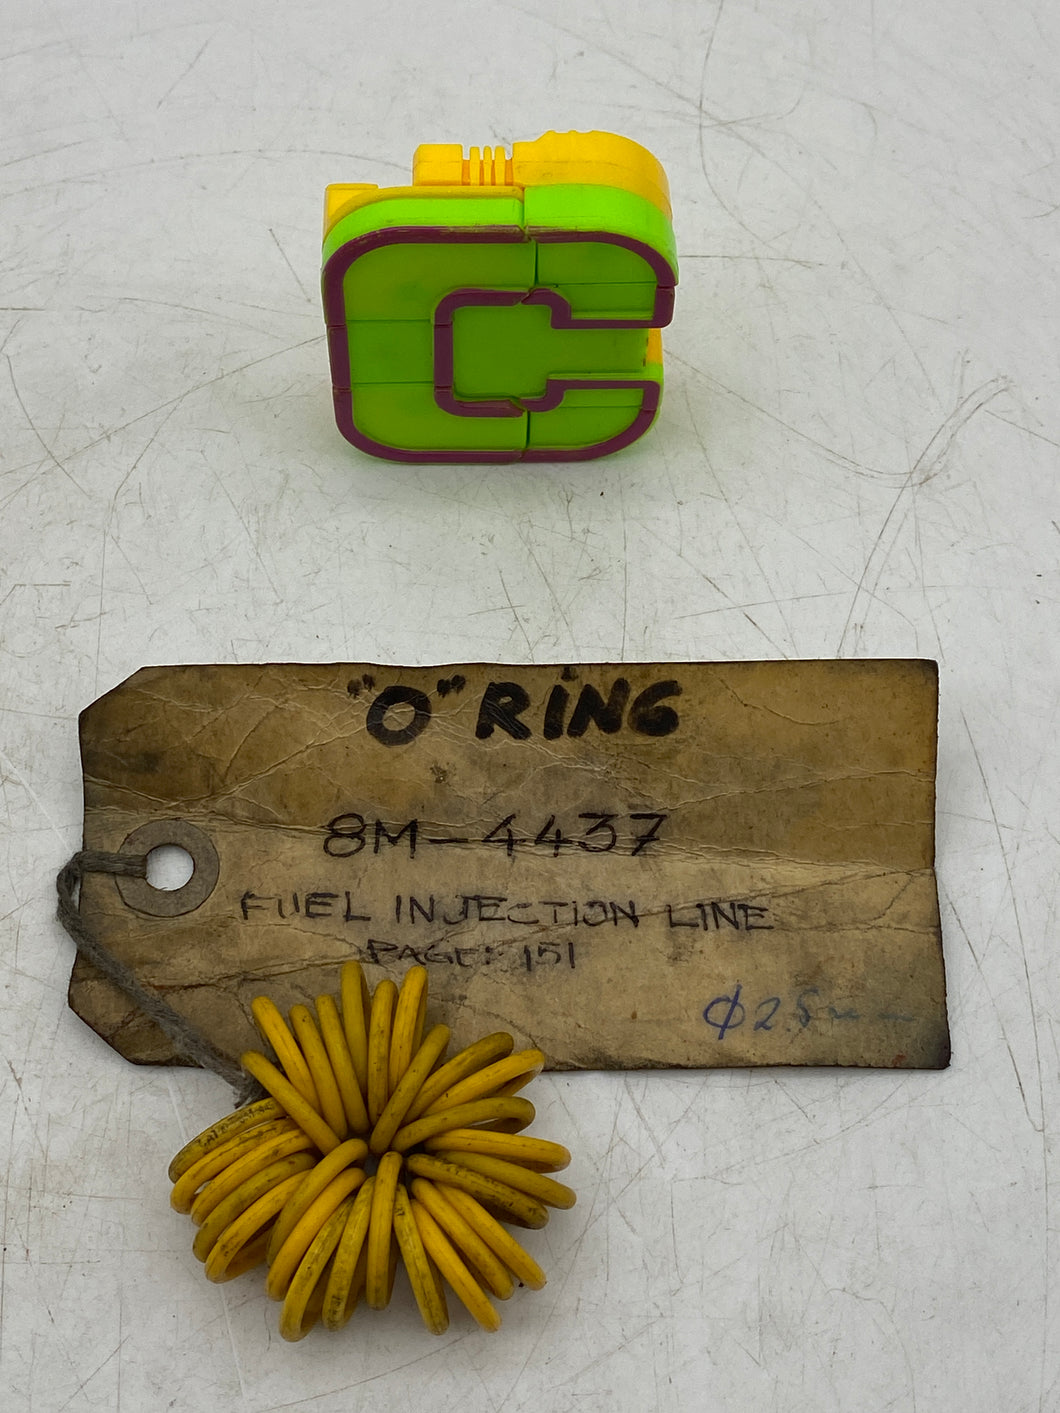 Caterpillar 8M-44372 O-Ring, *Lot of (28)* (No Box)